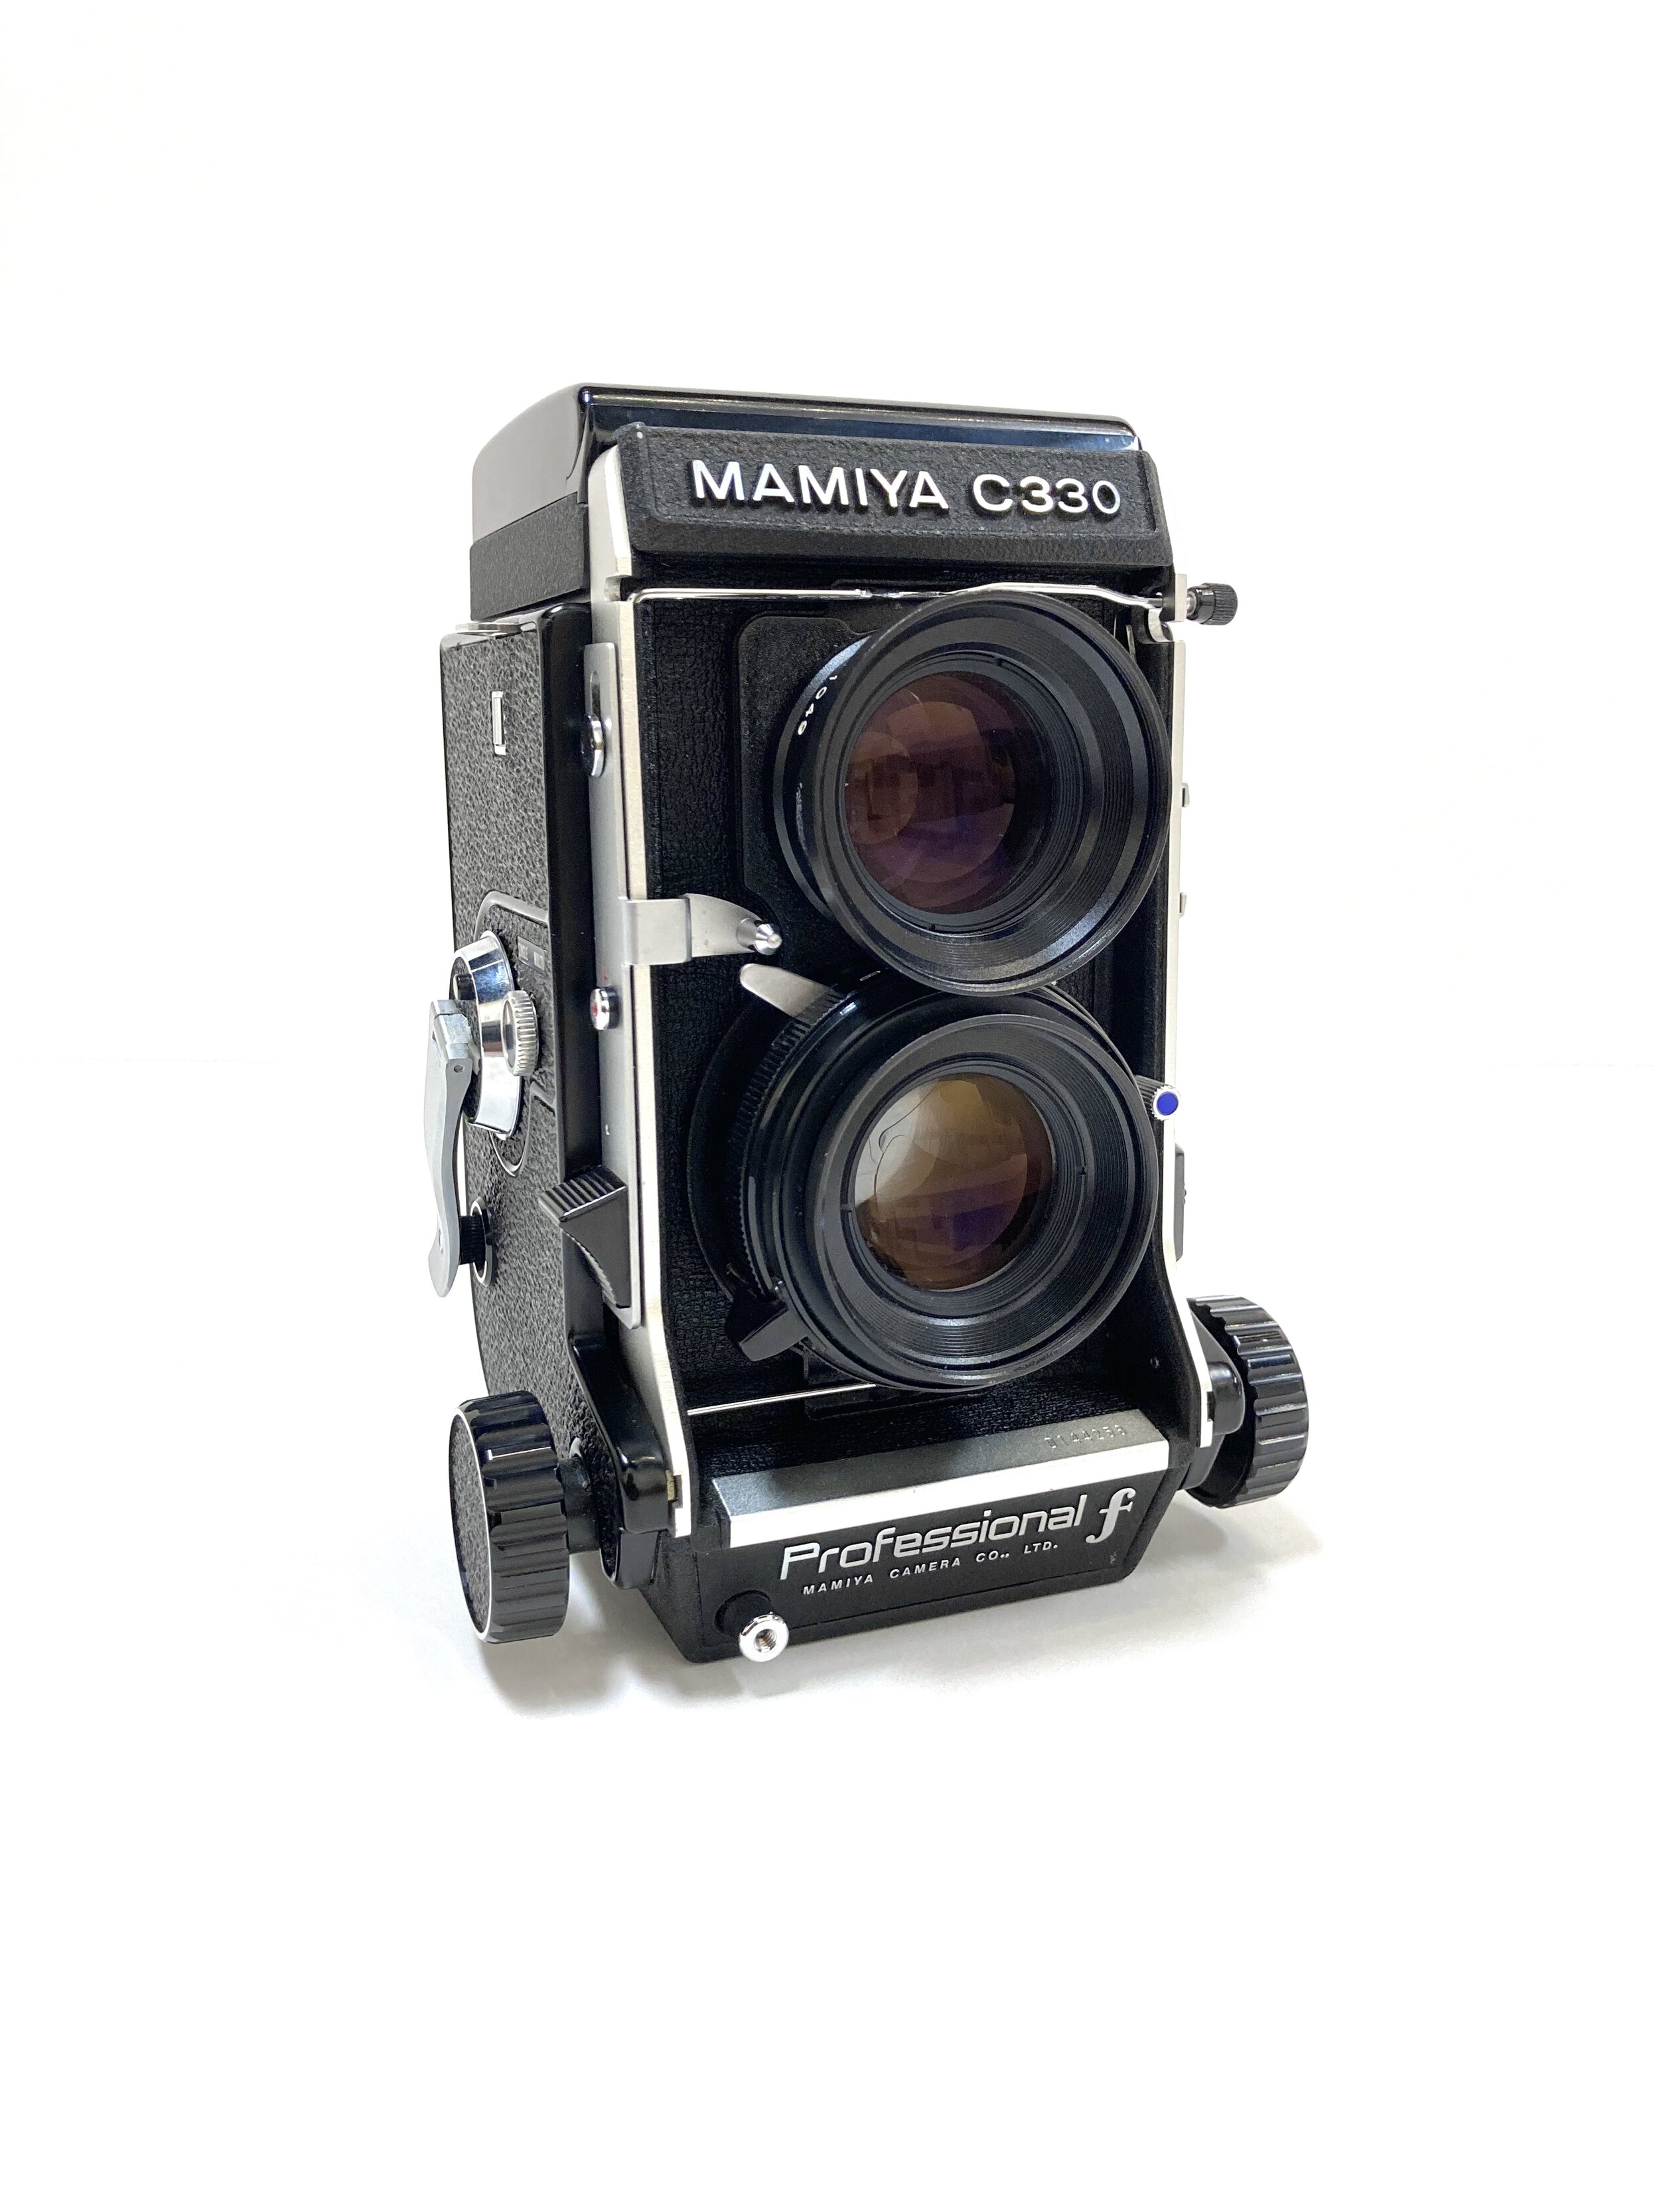 Mamiya C330 Professional F w/ Sekor 80mm F/2.8 Blue Dot Lens —  Photographique